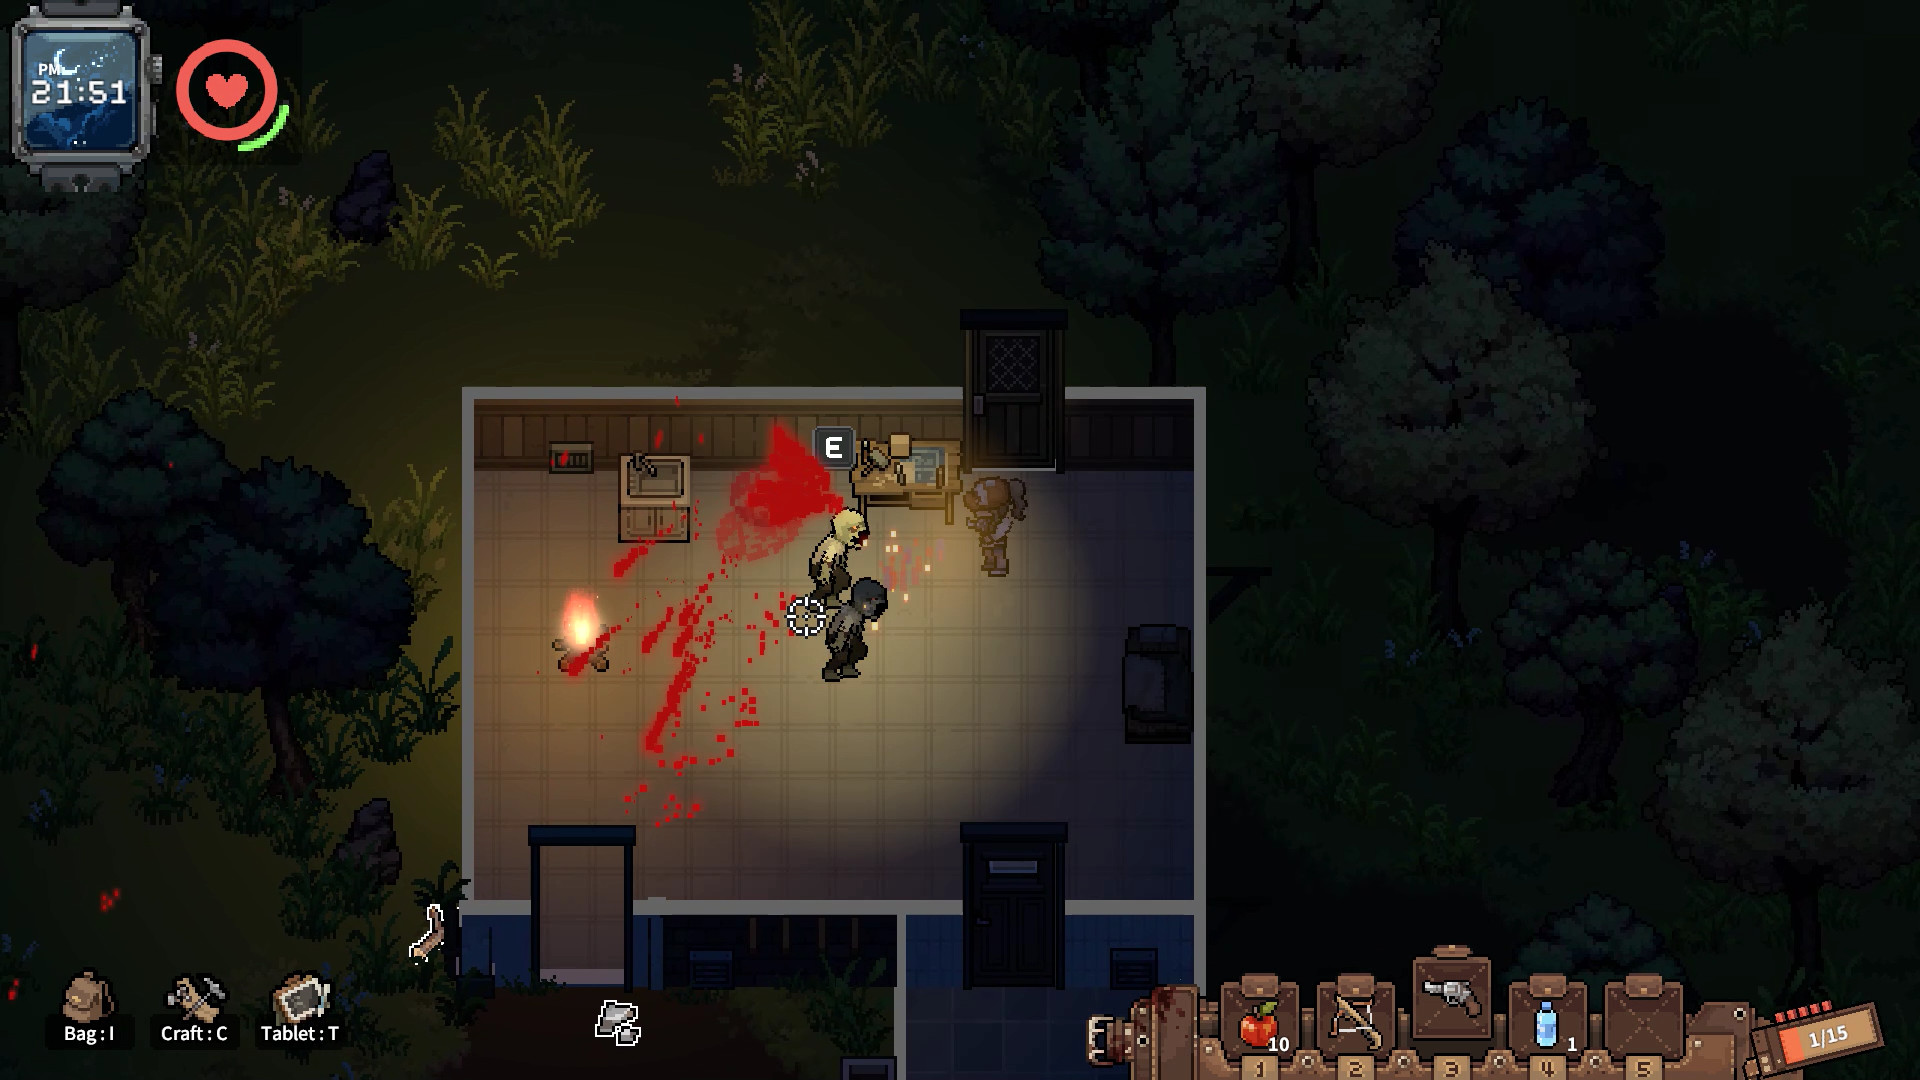 Zombie Survival online on Steam